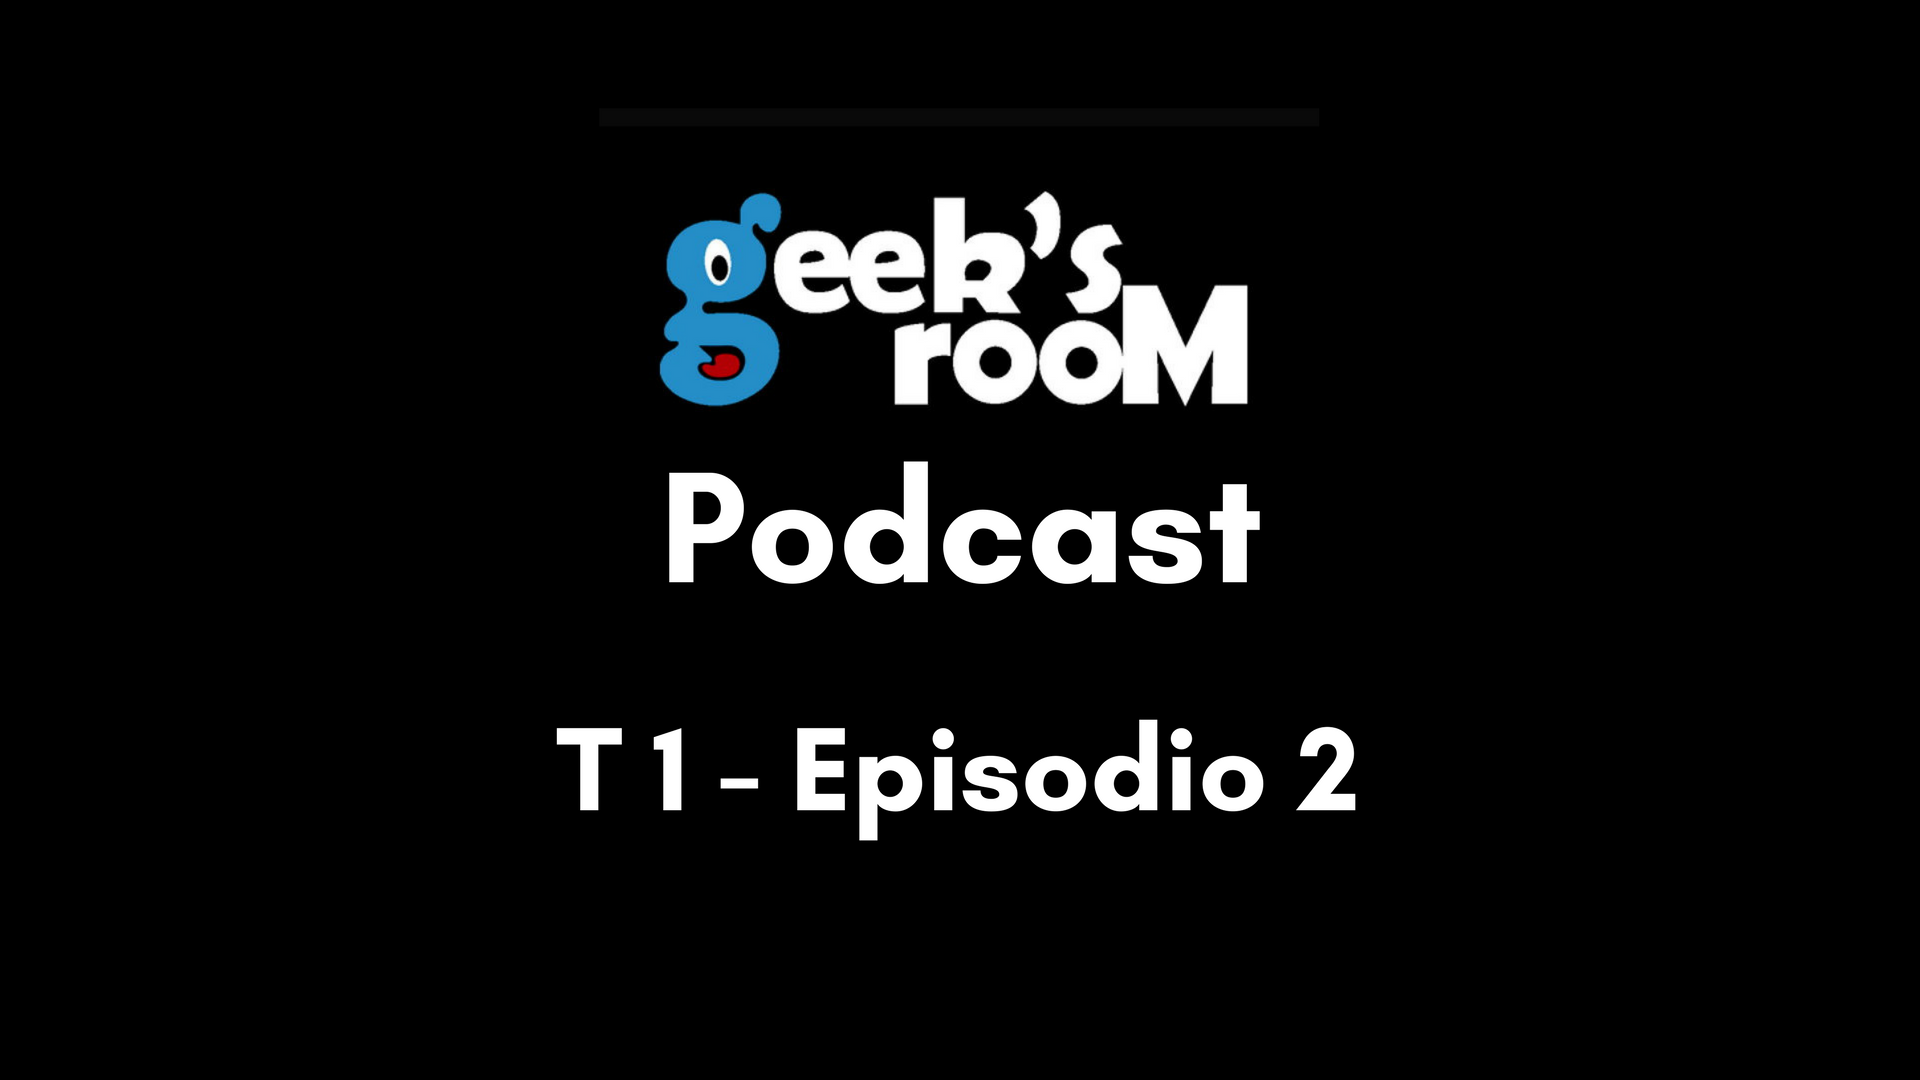 Geeksroom Podcast – Temporada 1 Episodio 2